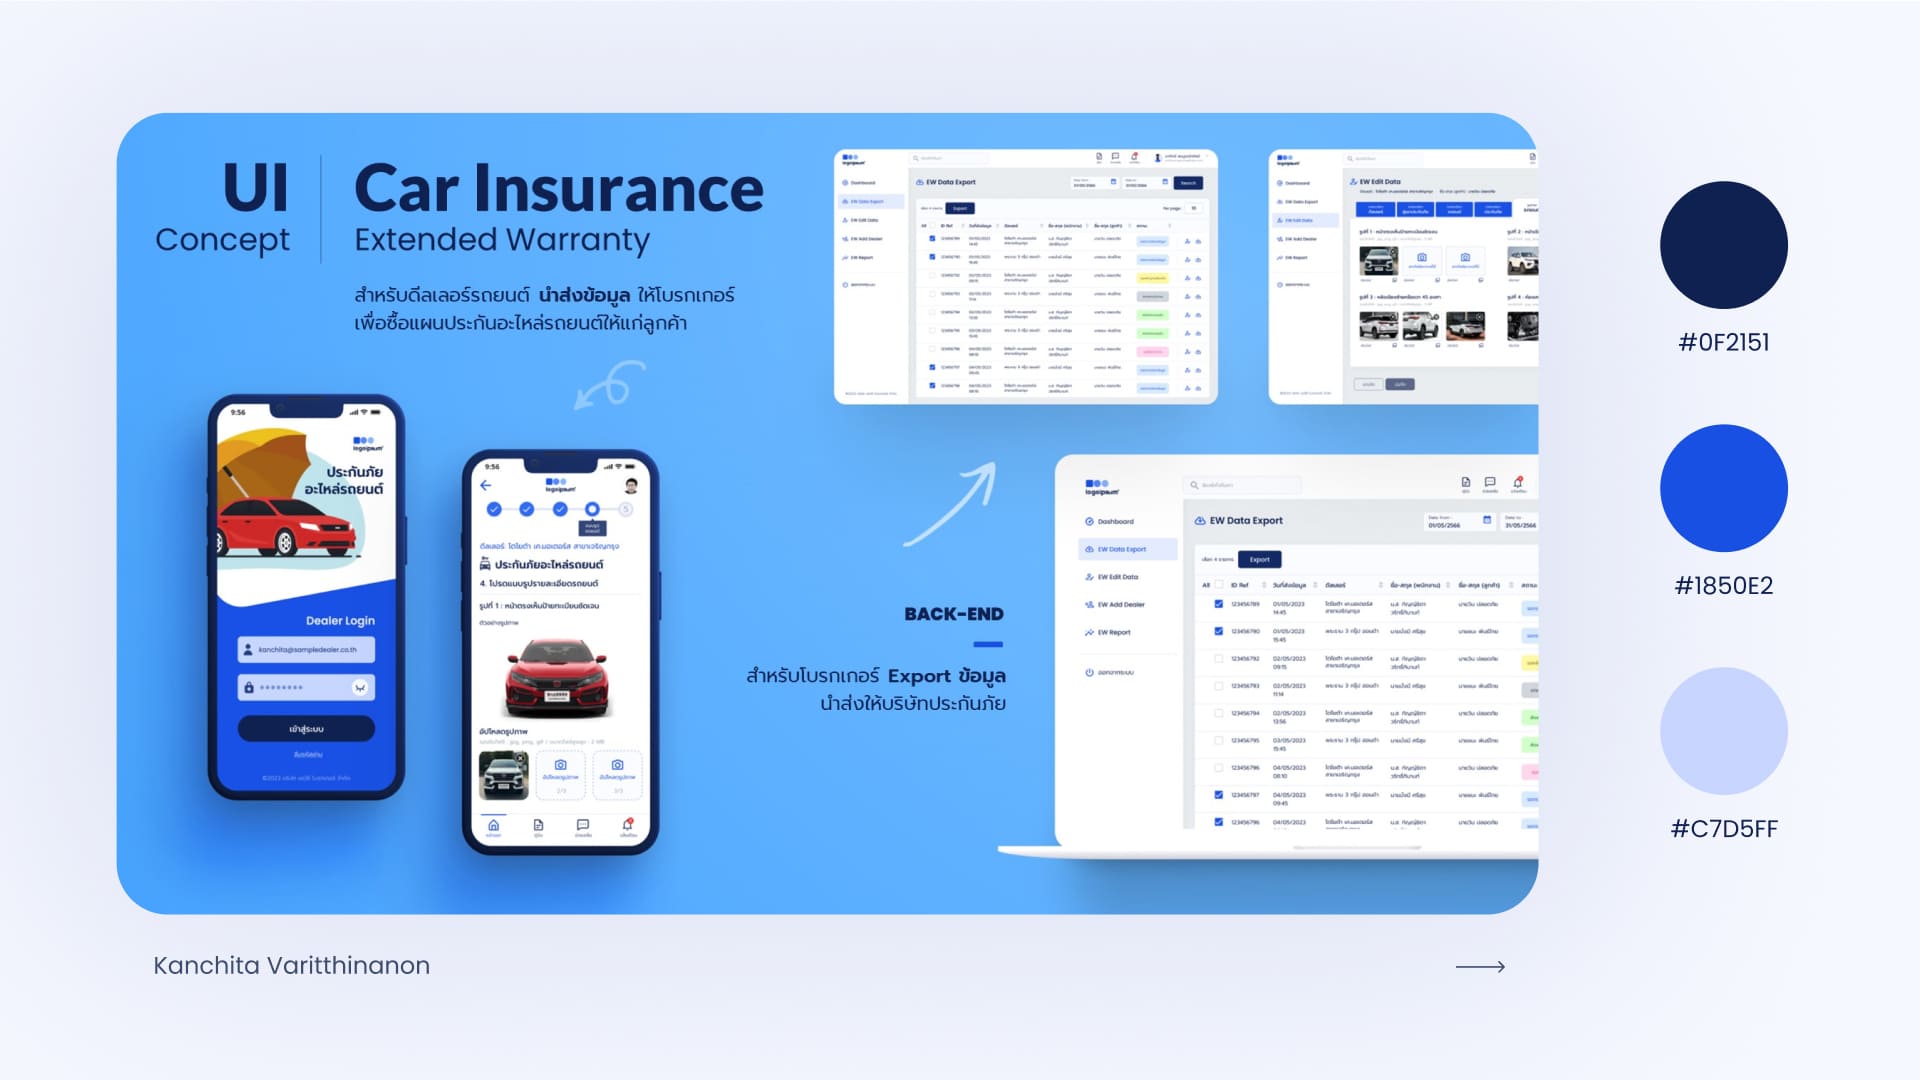 The Motor - Car Insurance Web App UI Concept Design Featured by Kanchita Varitthinanon